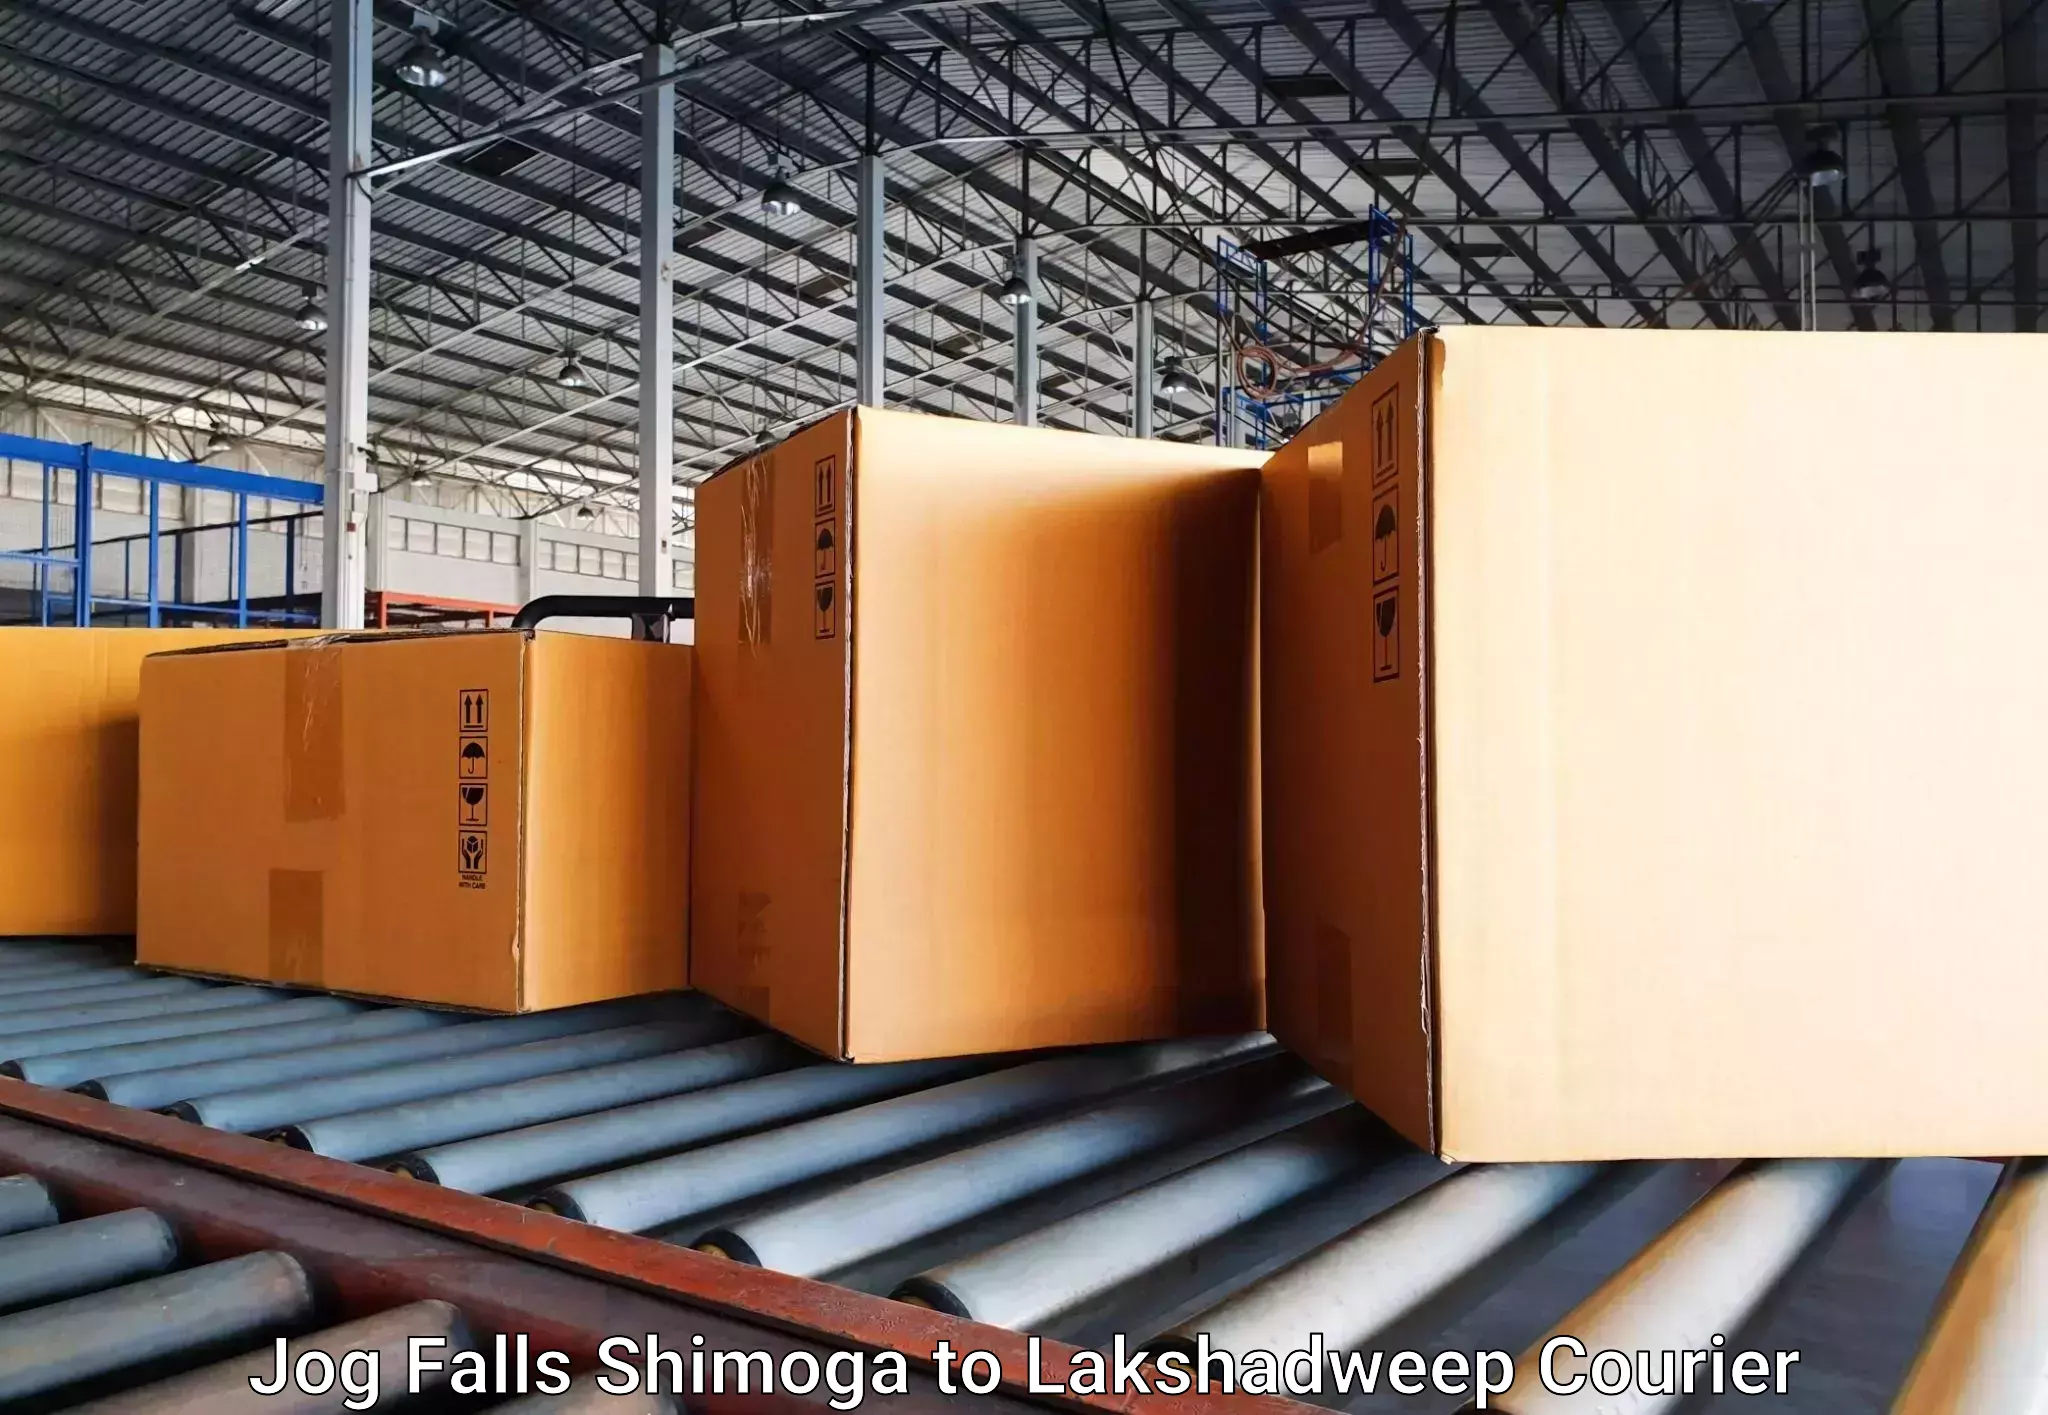 Luggage delivery network Jog Falls Shimoga to Lakshadweep